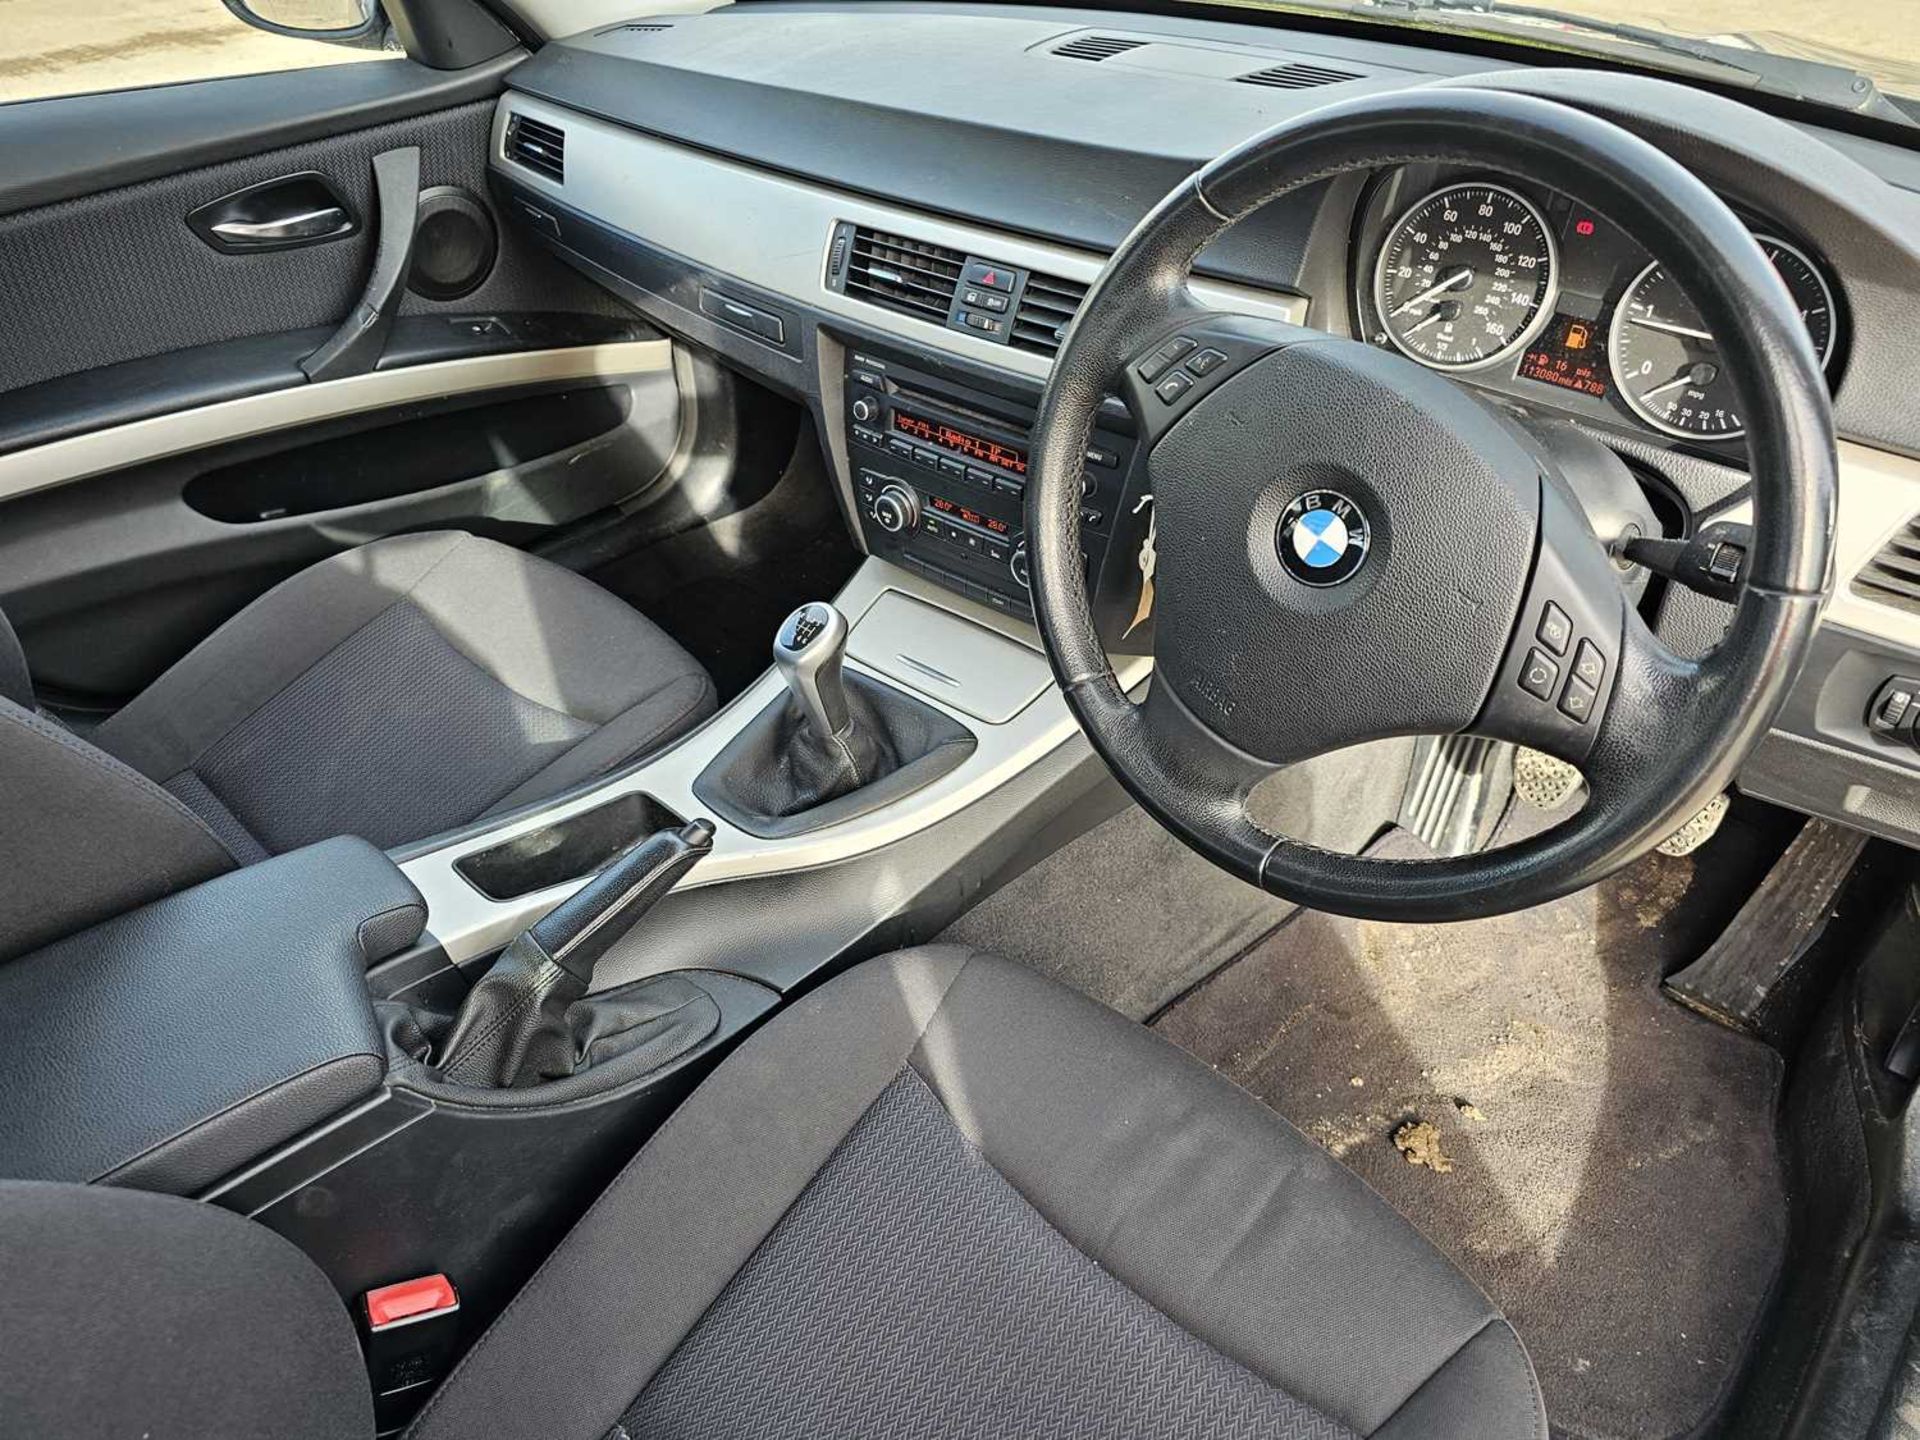 2011 BMW 320D, 6 Speed, Parking Sensors, Bluetooth, A/C (Reg. Docs. Available, Tested 01/25) - Bild 18 aus 28